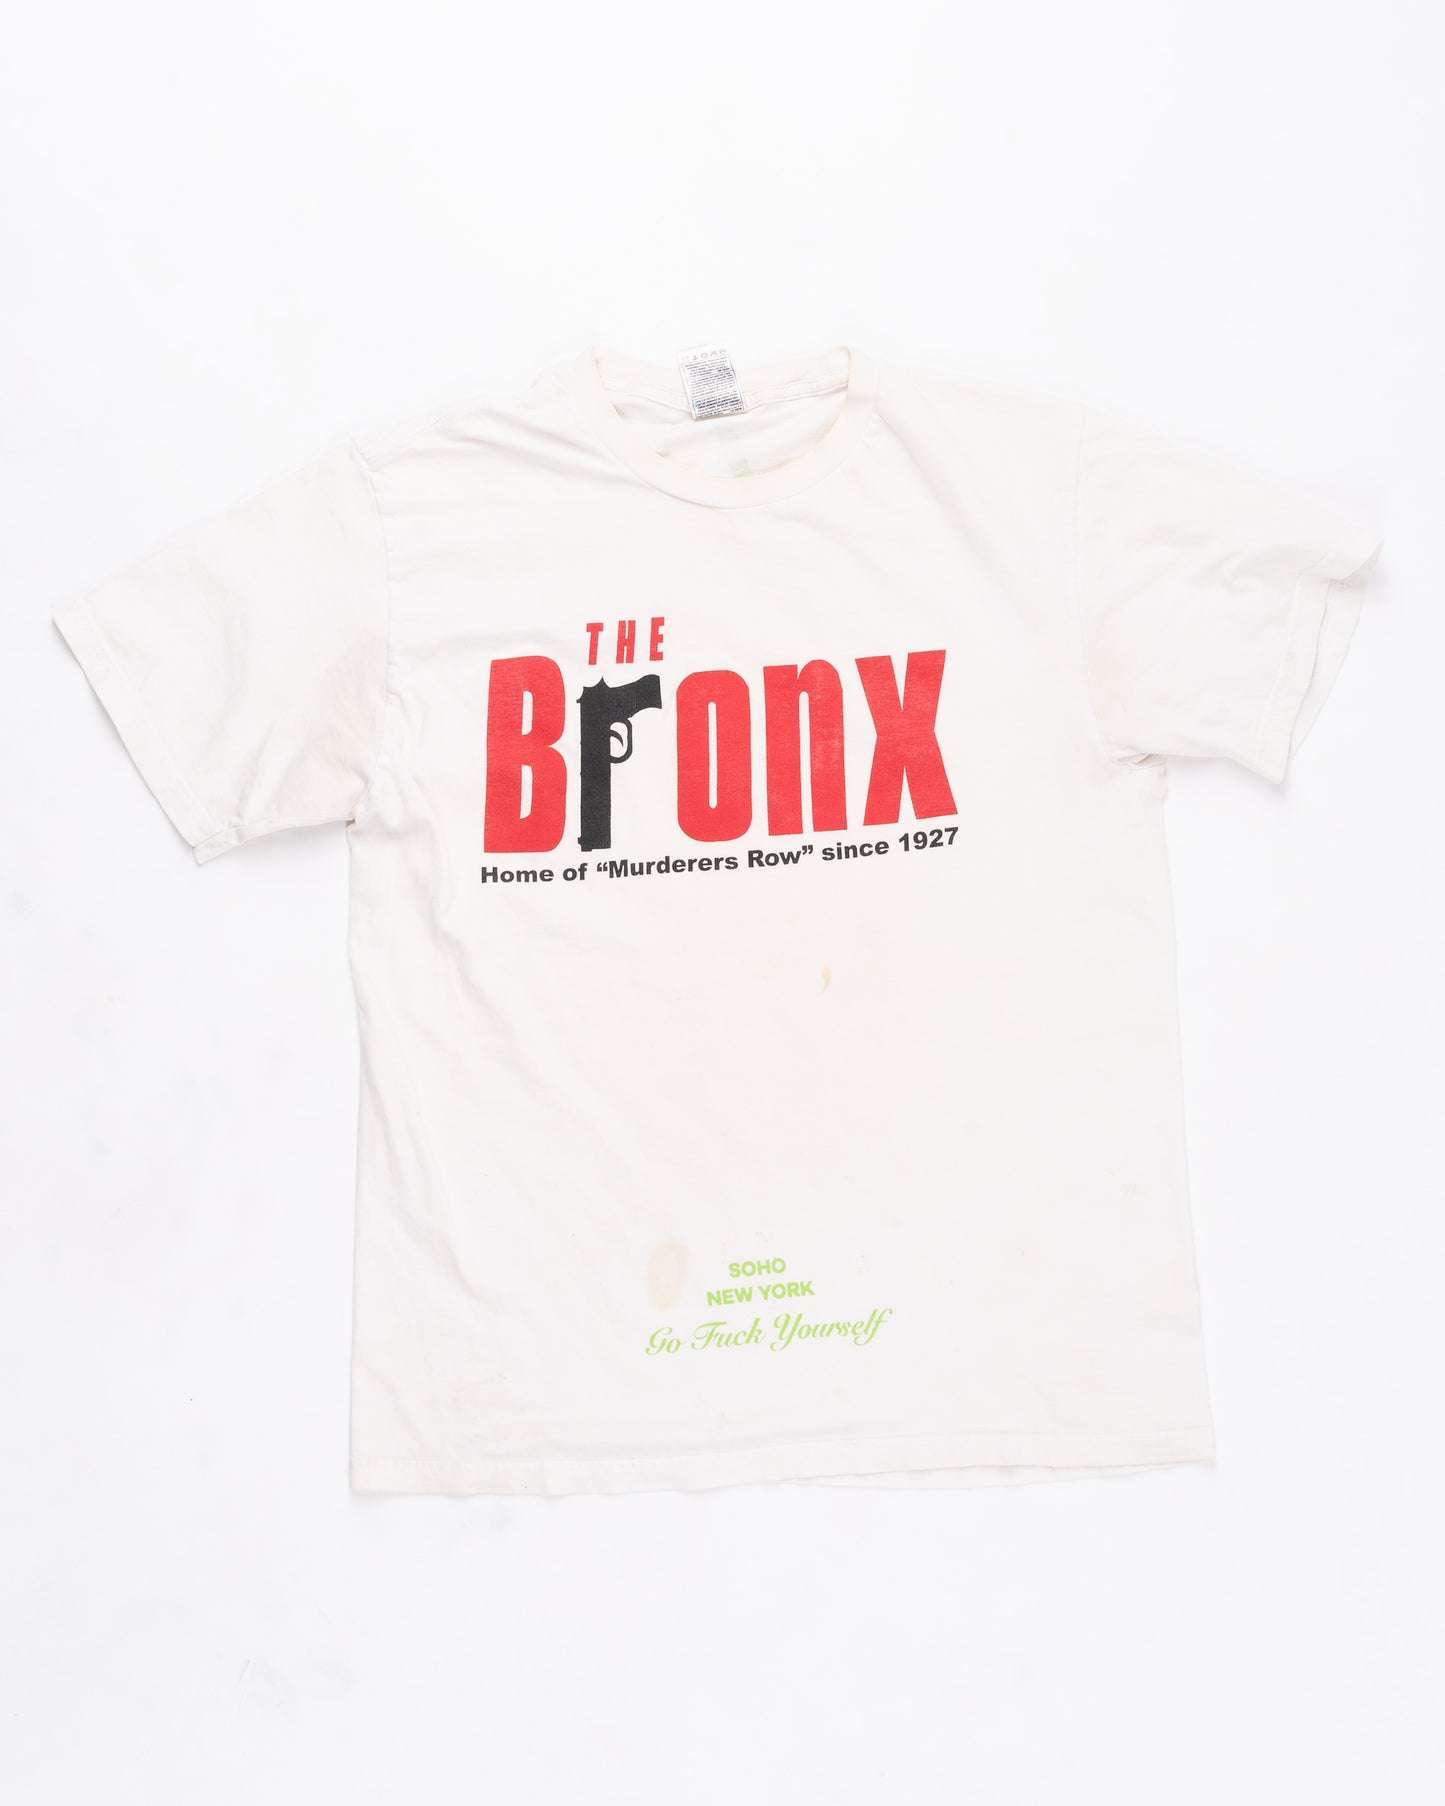 The Bronx T-Shirt Size: Medium